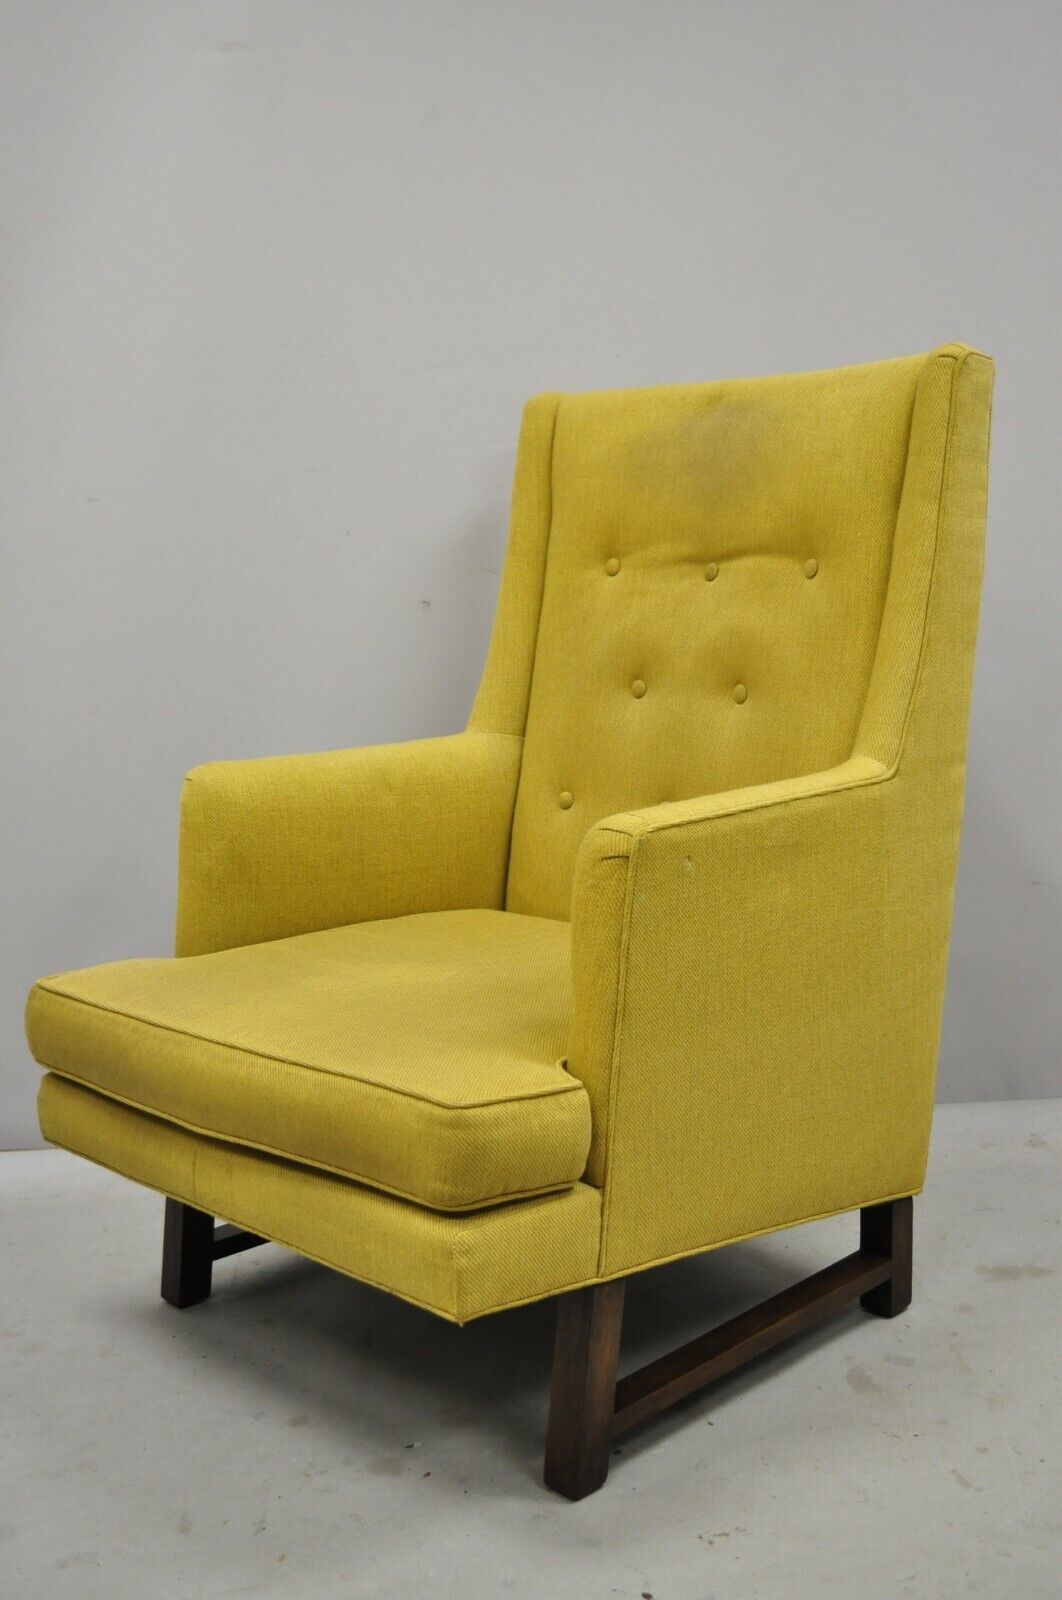 Edward Wormley for Dunbar Walnut Frame High Back Lounge Chair and Ottoman